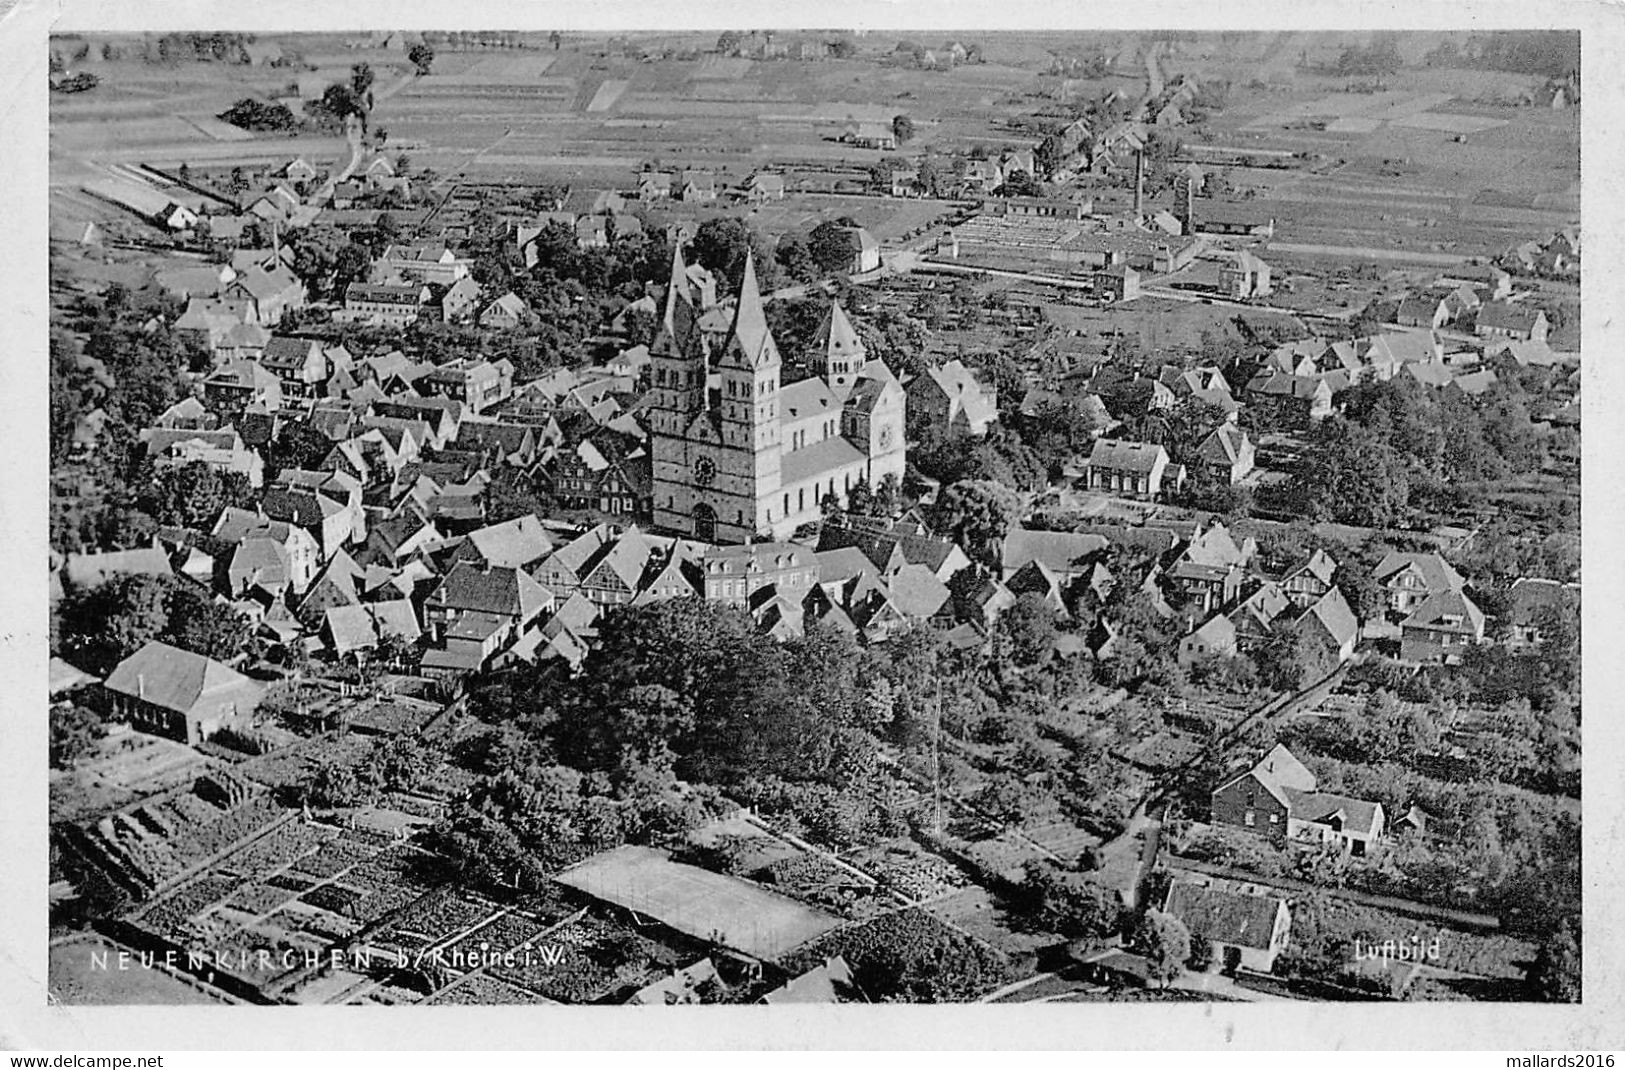 NEUENKIRCHEN - REAL PHOTO AERIAL VIEW ~ AN OLD POSTCARD #230518 - Steinfurt